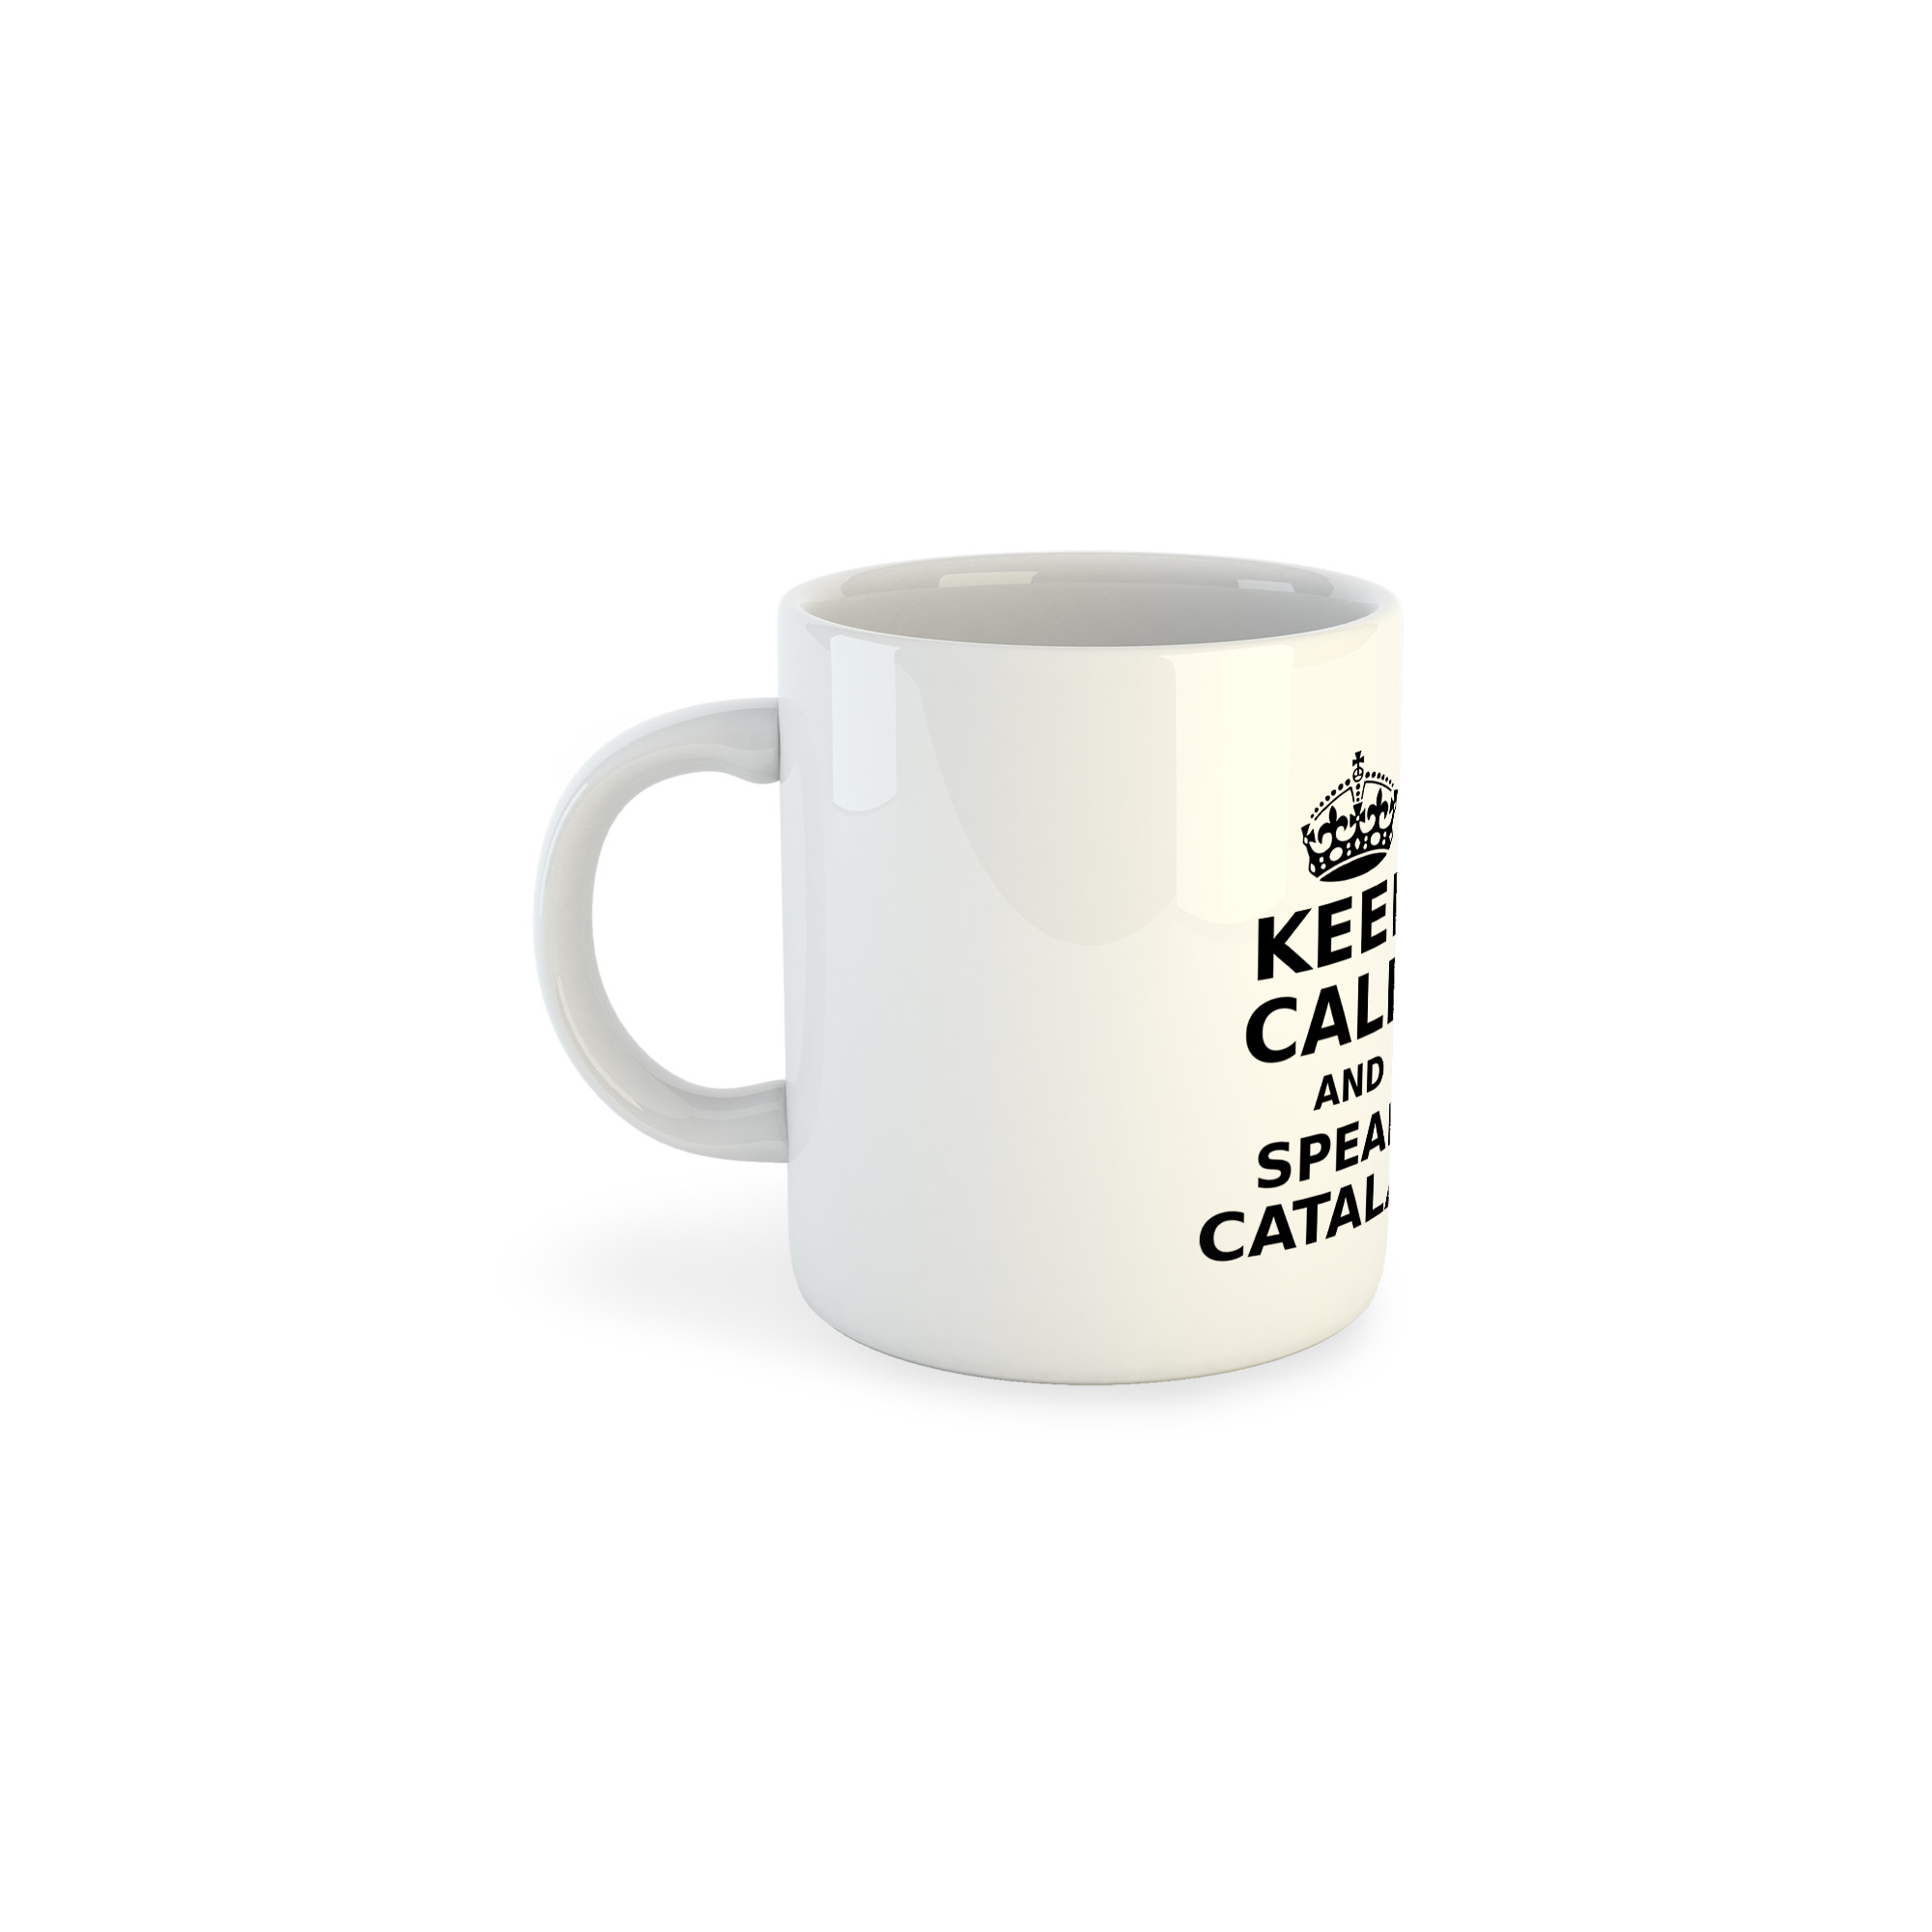 Mug 325 ml Catalonia Keep Calm and Speak Catalan